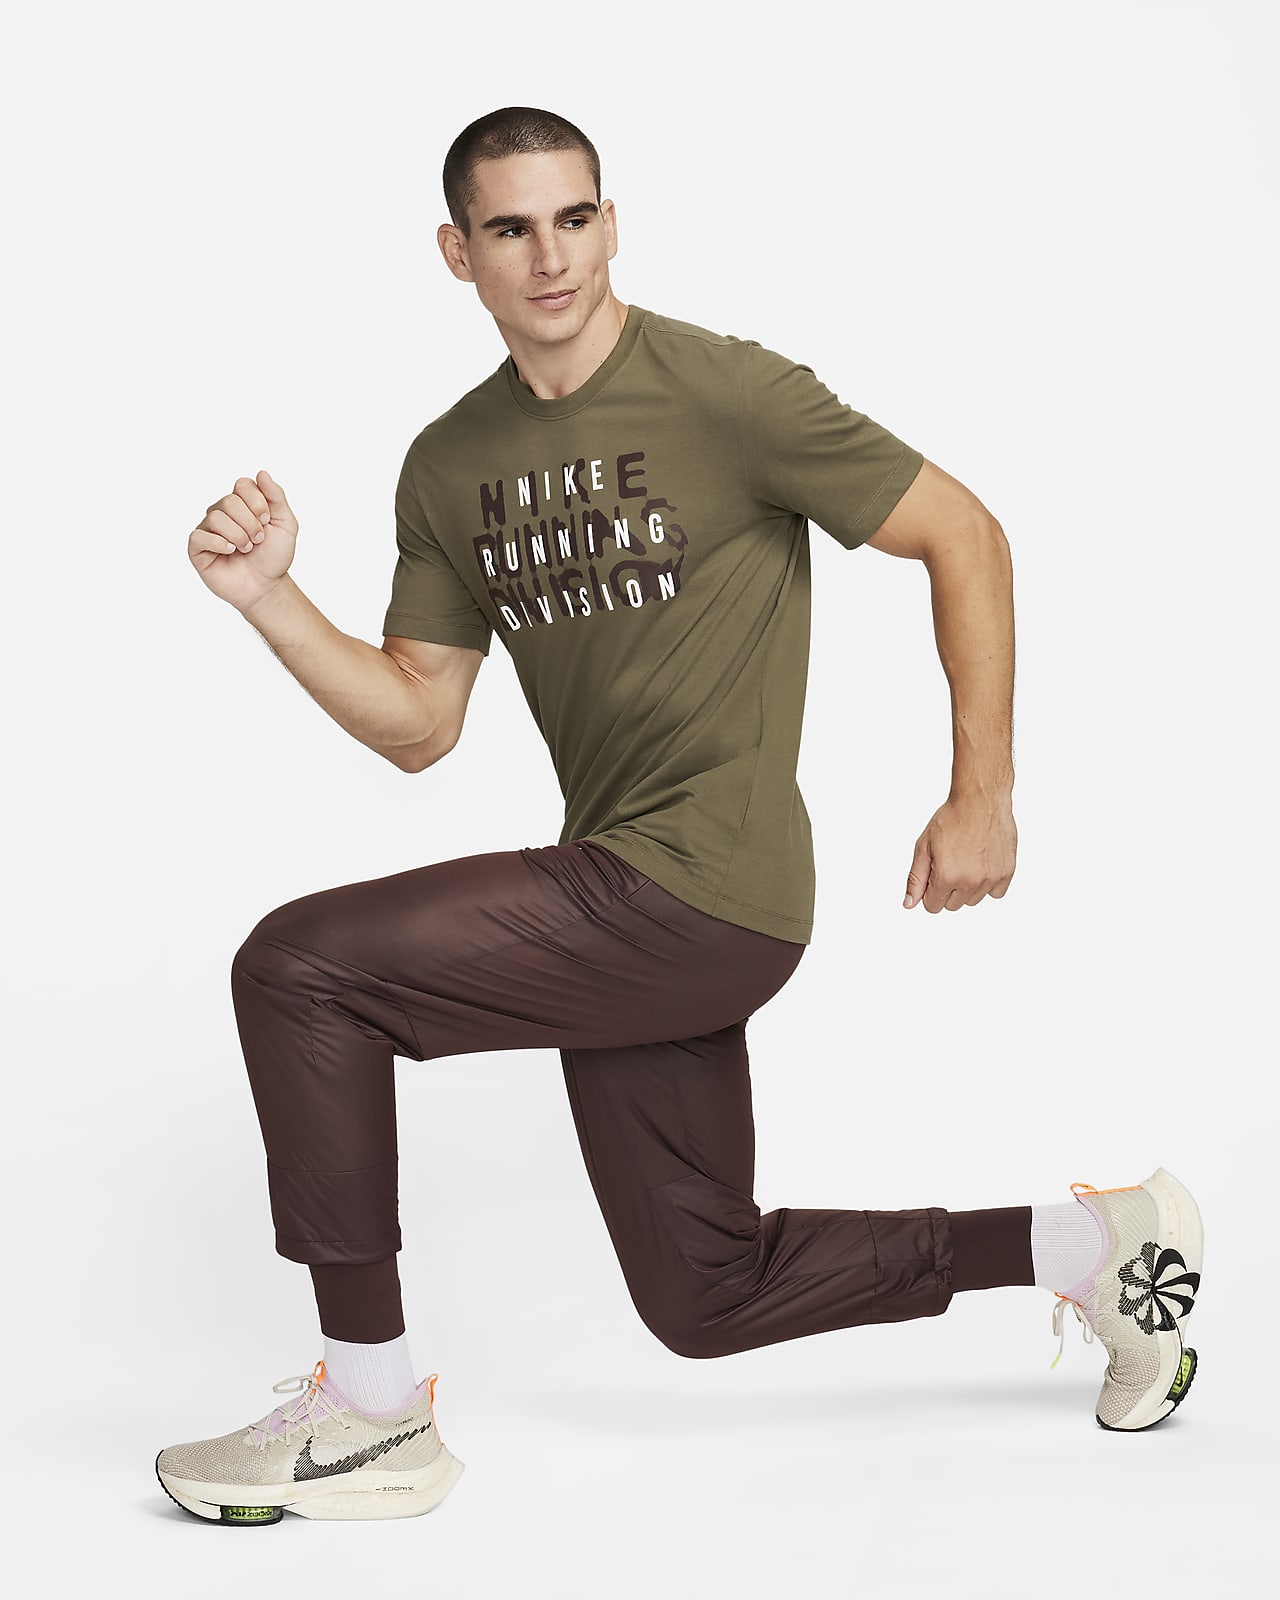 WTS] [USA-NC] Nike DRI-FIT Phenom Run Division Hybrid Running Pants, Men's  S, NWT